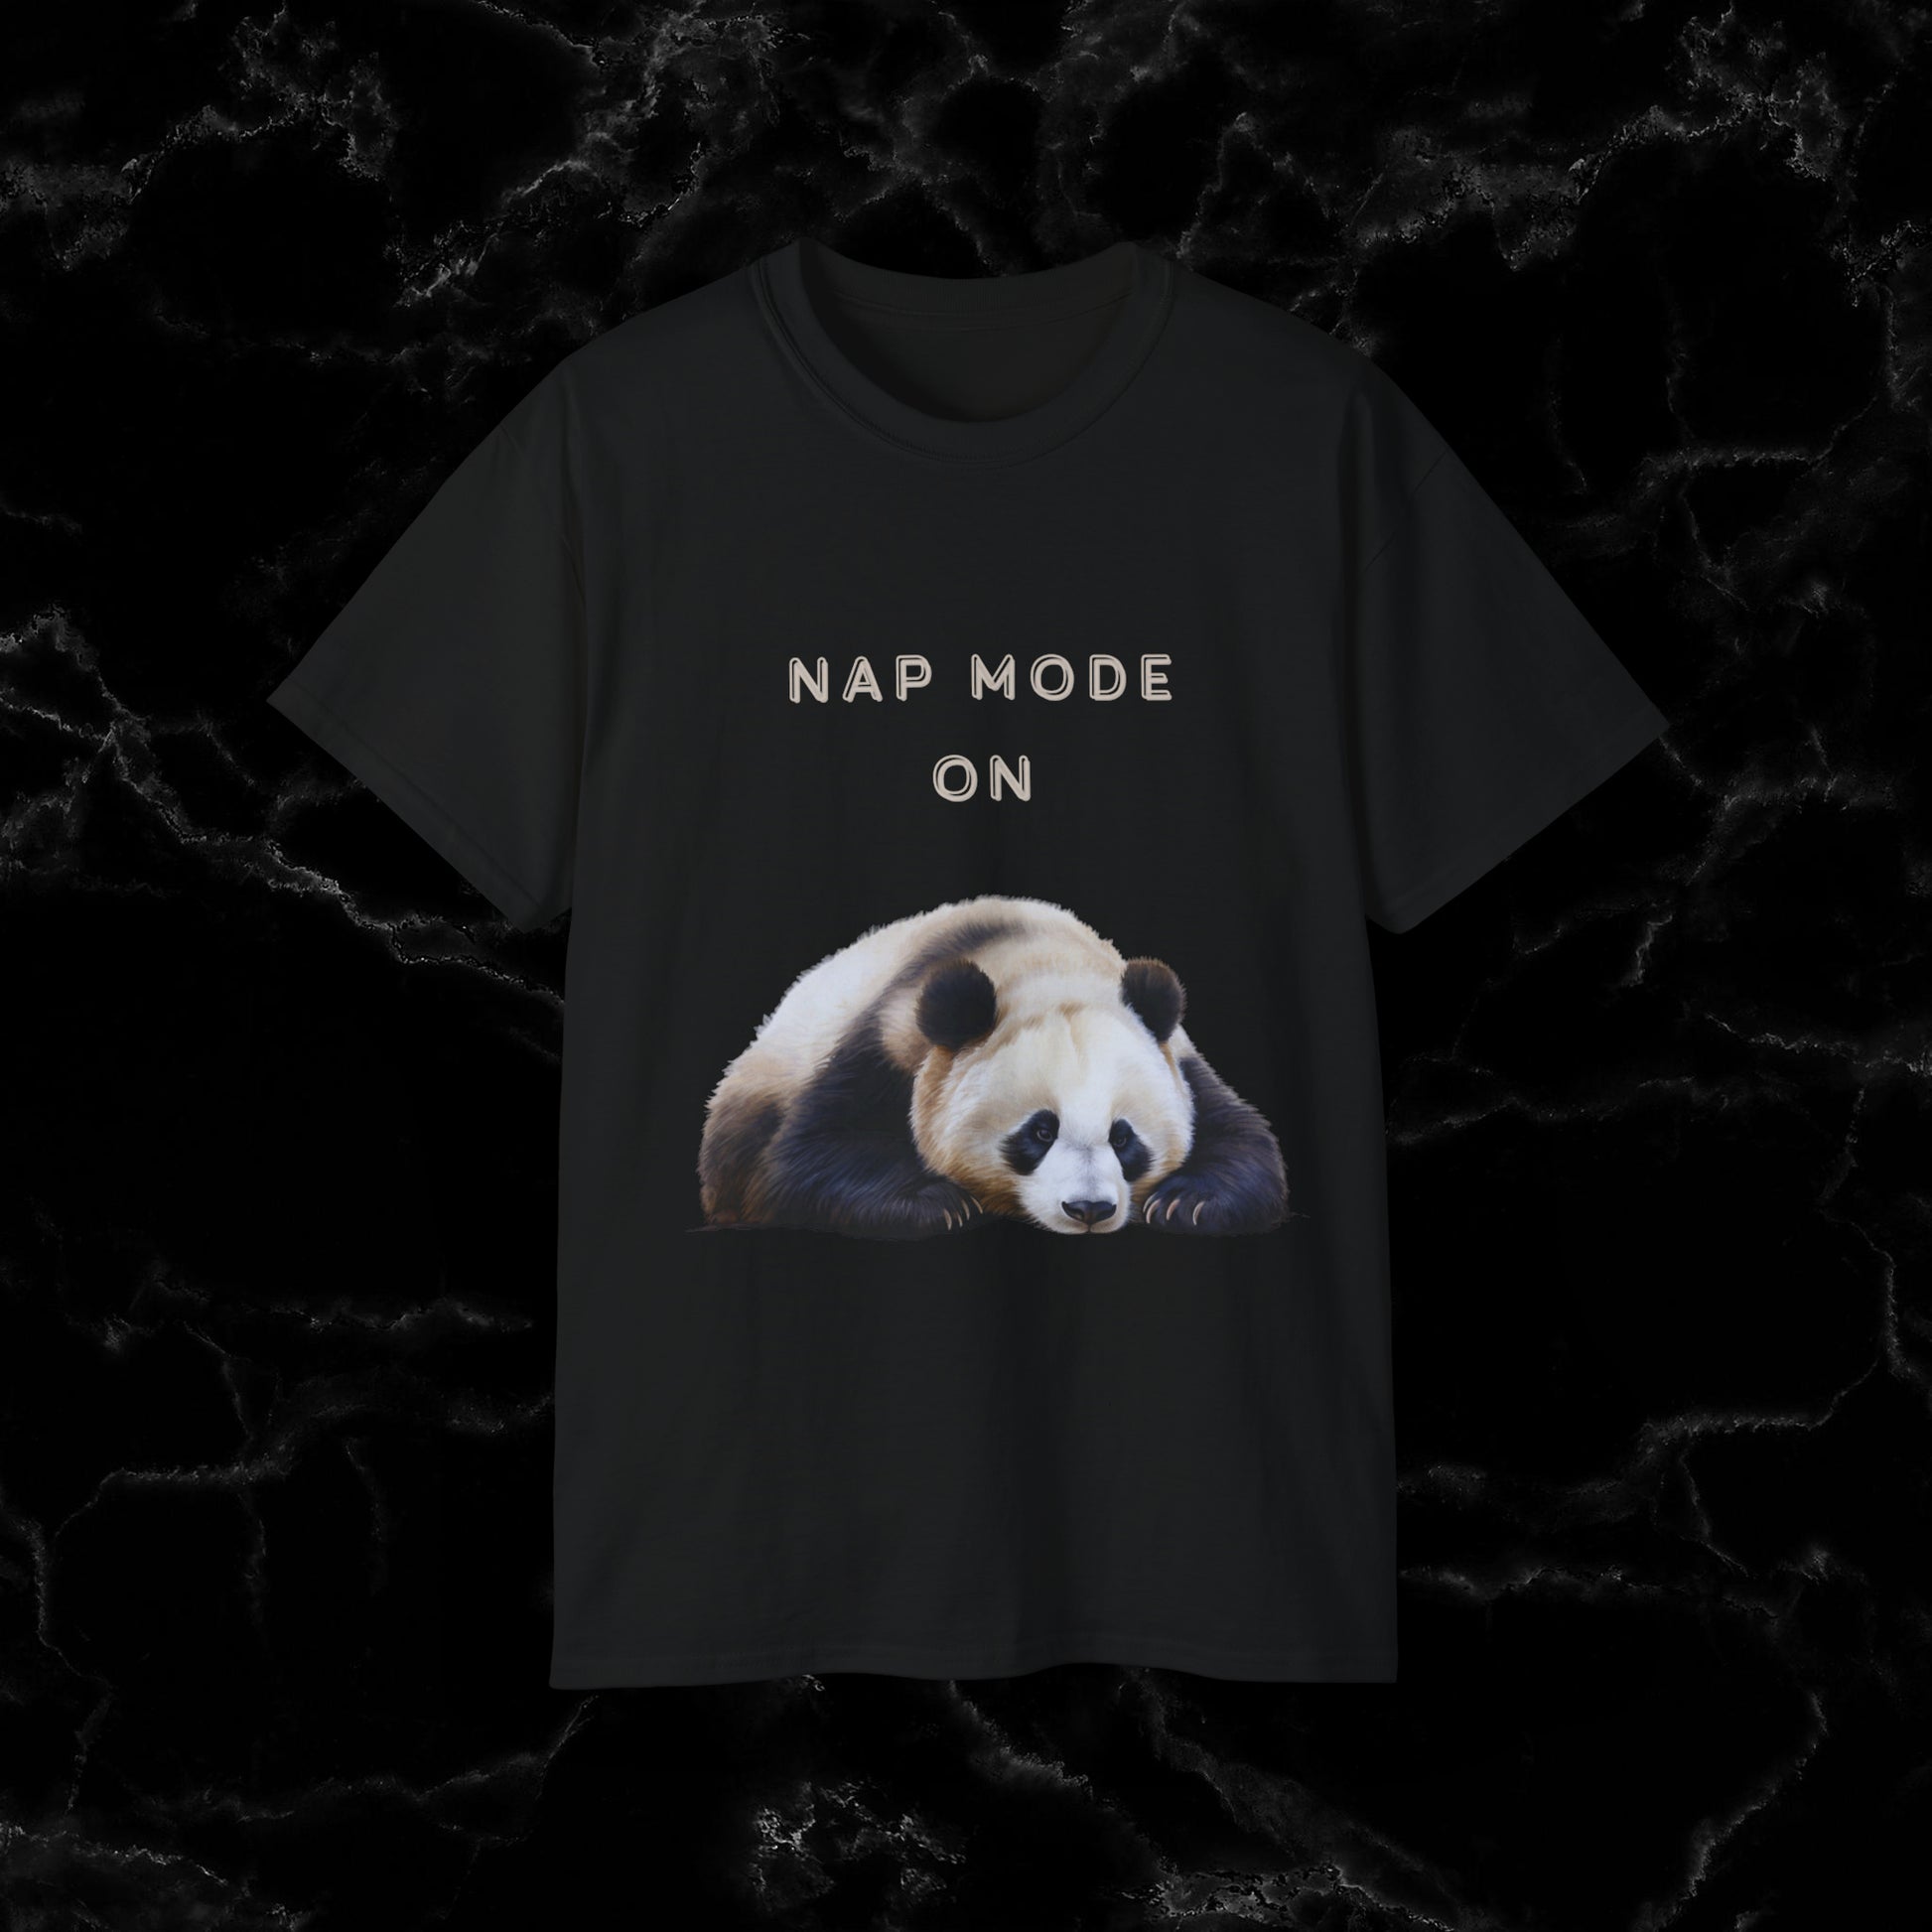 Nap Time Panda Unisex Funny Tee - Hilarious Panda Nap Design T-Shirt Black S 